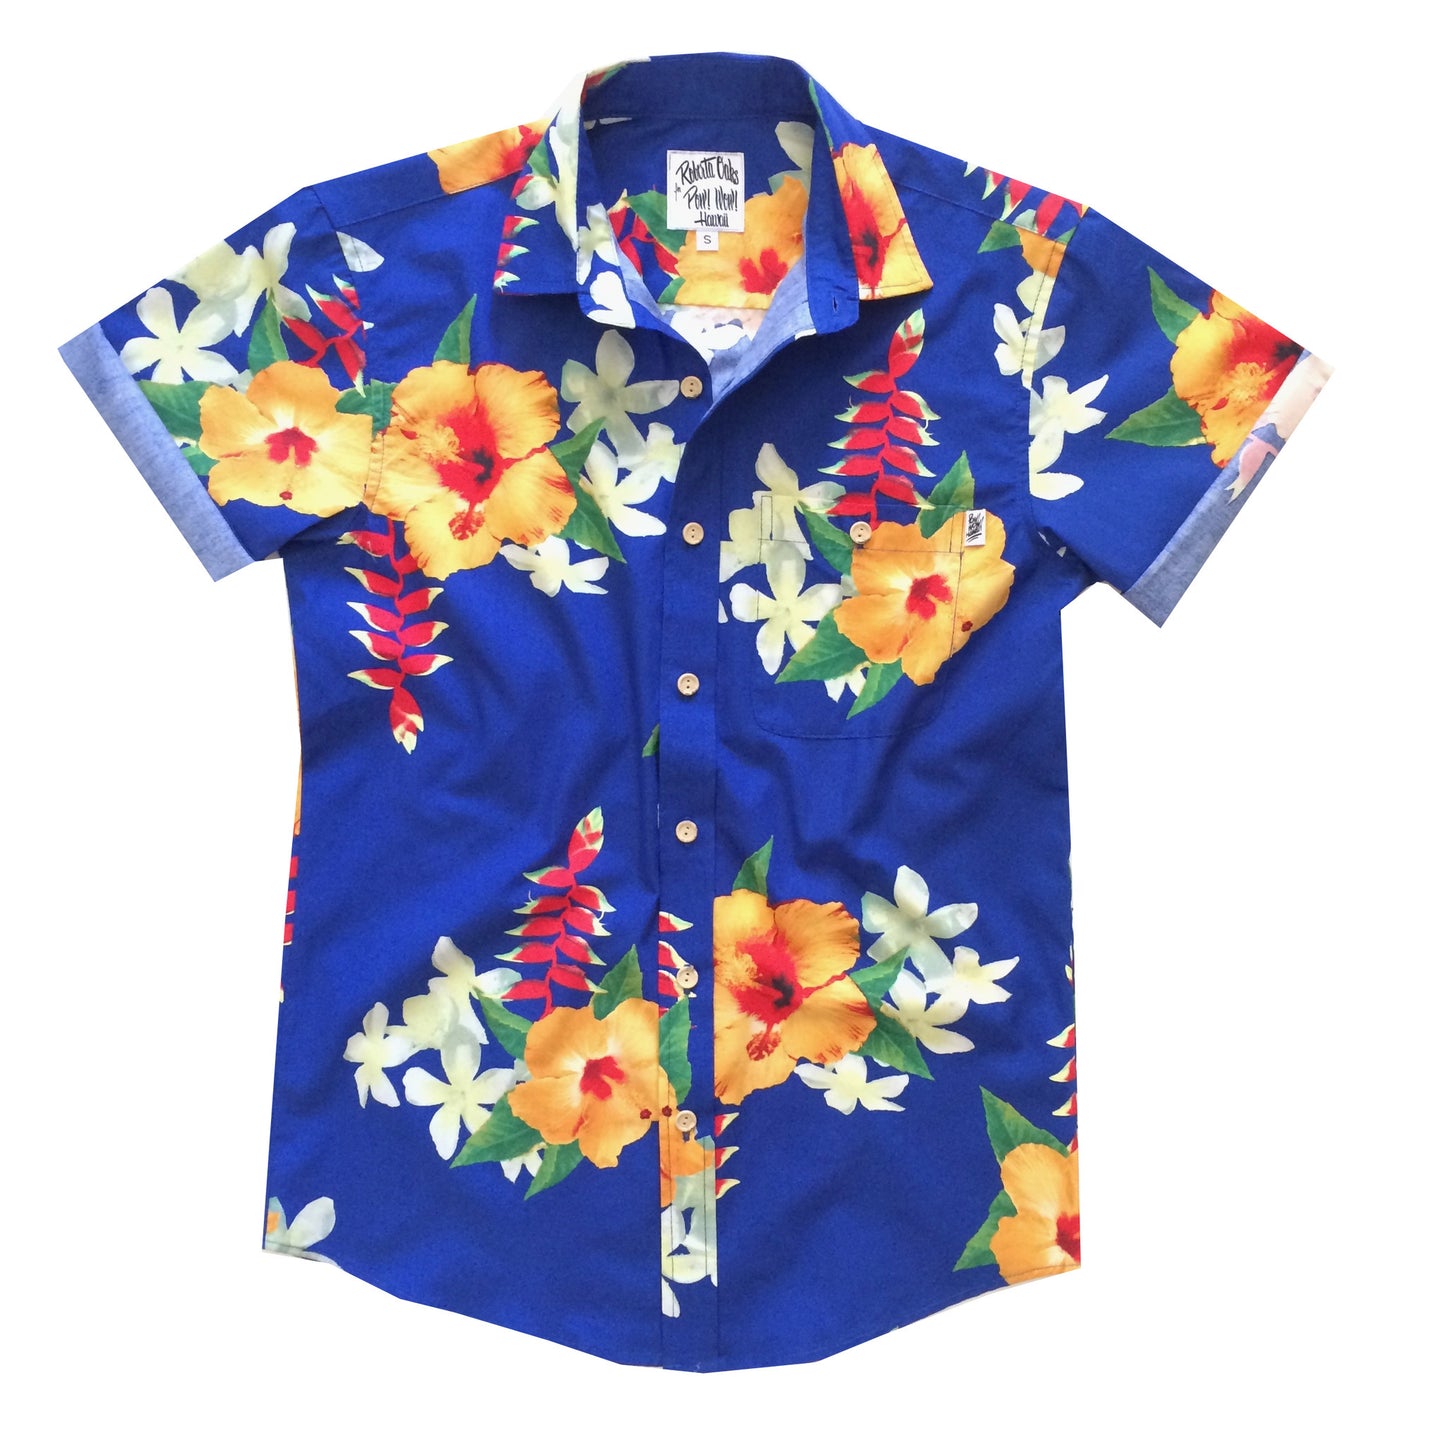 Pow! Wow! Hawaii 2016 Halekauwila Shirt - SOLD OUT – Roberta Oaks, Hawaii